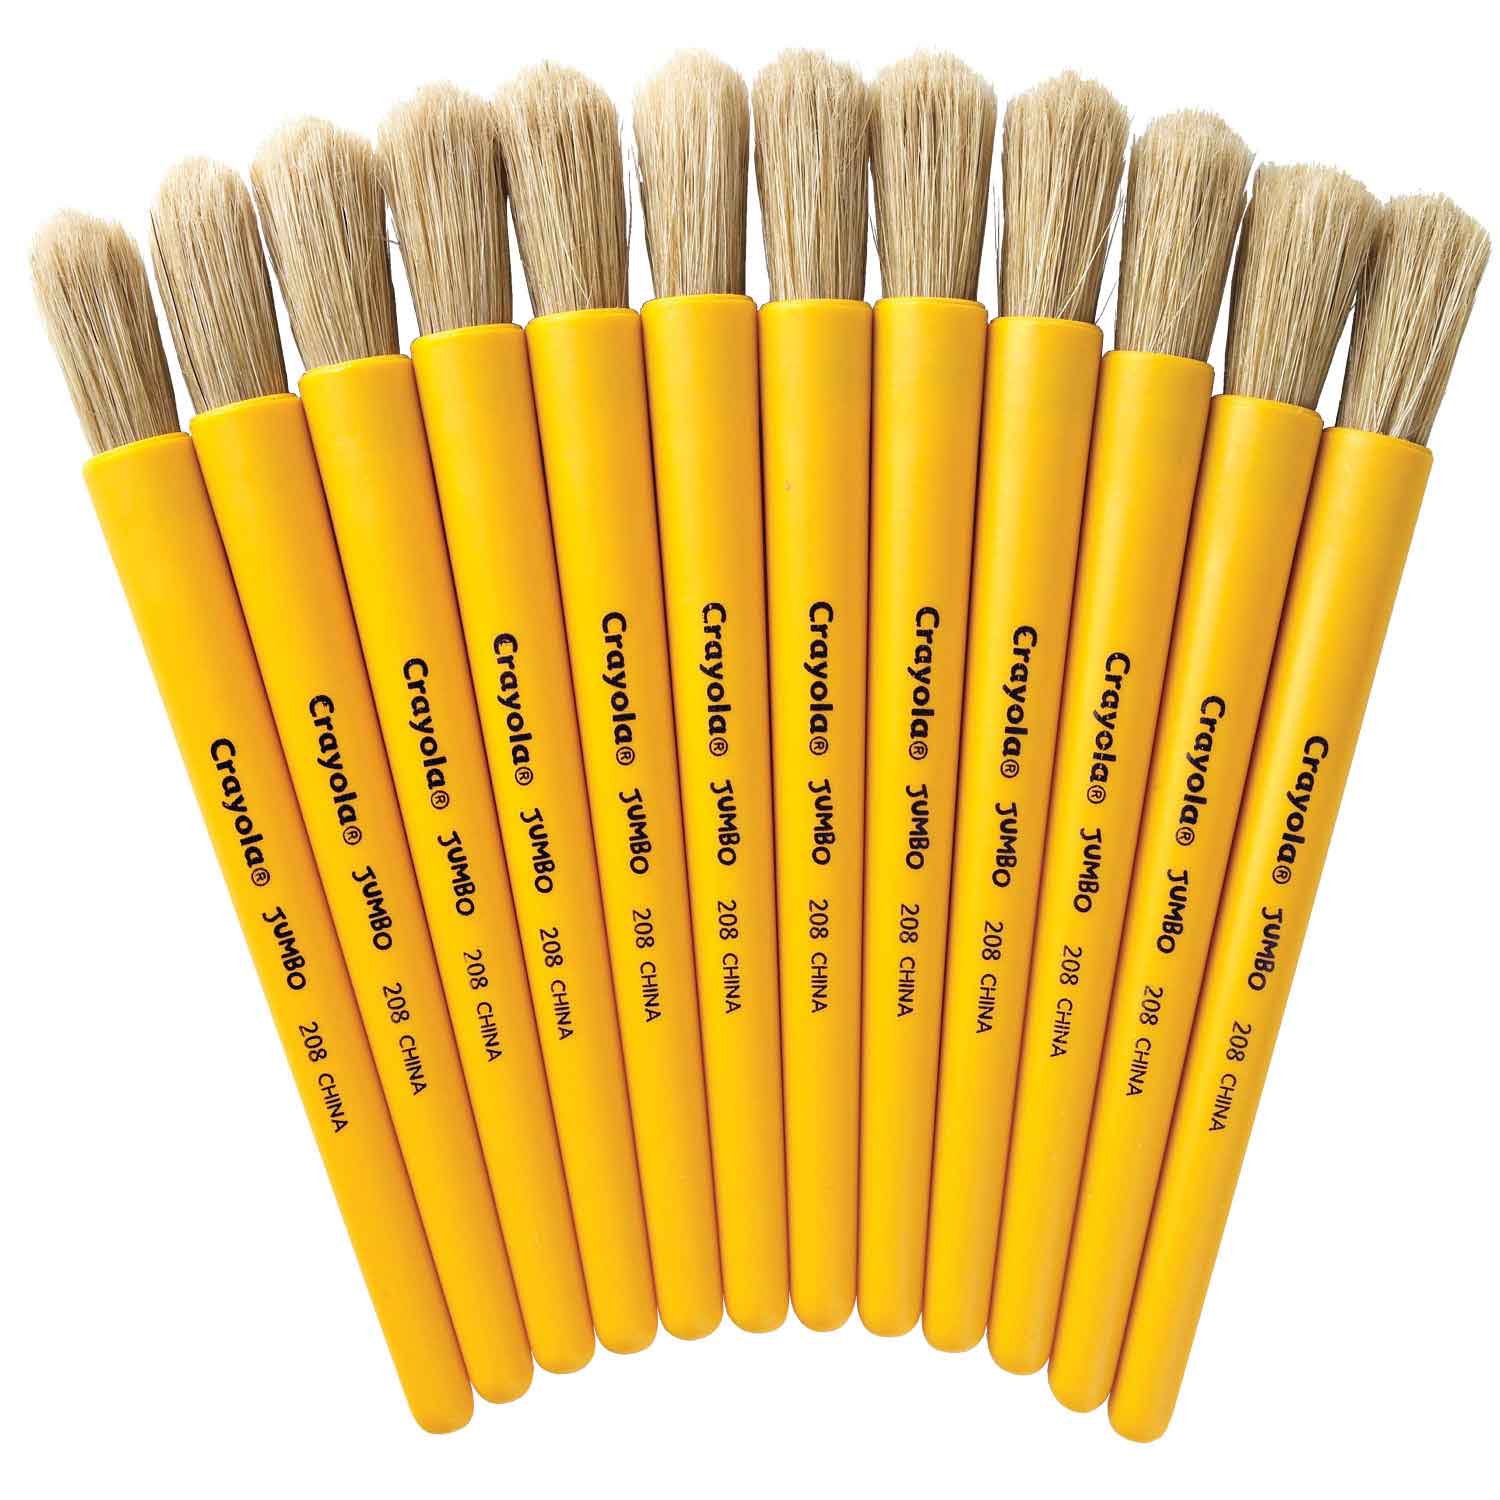 Crayola® Jumbo Paint Brush